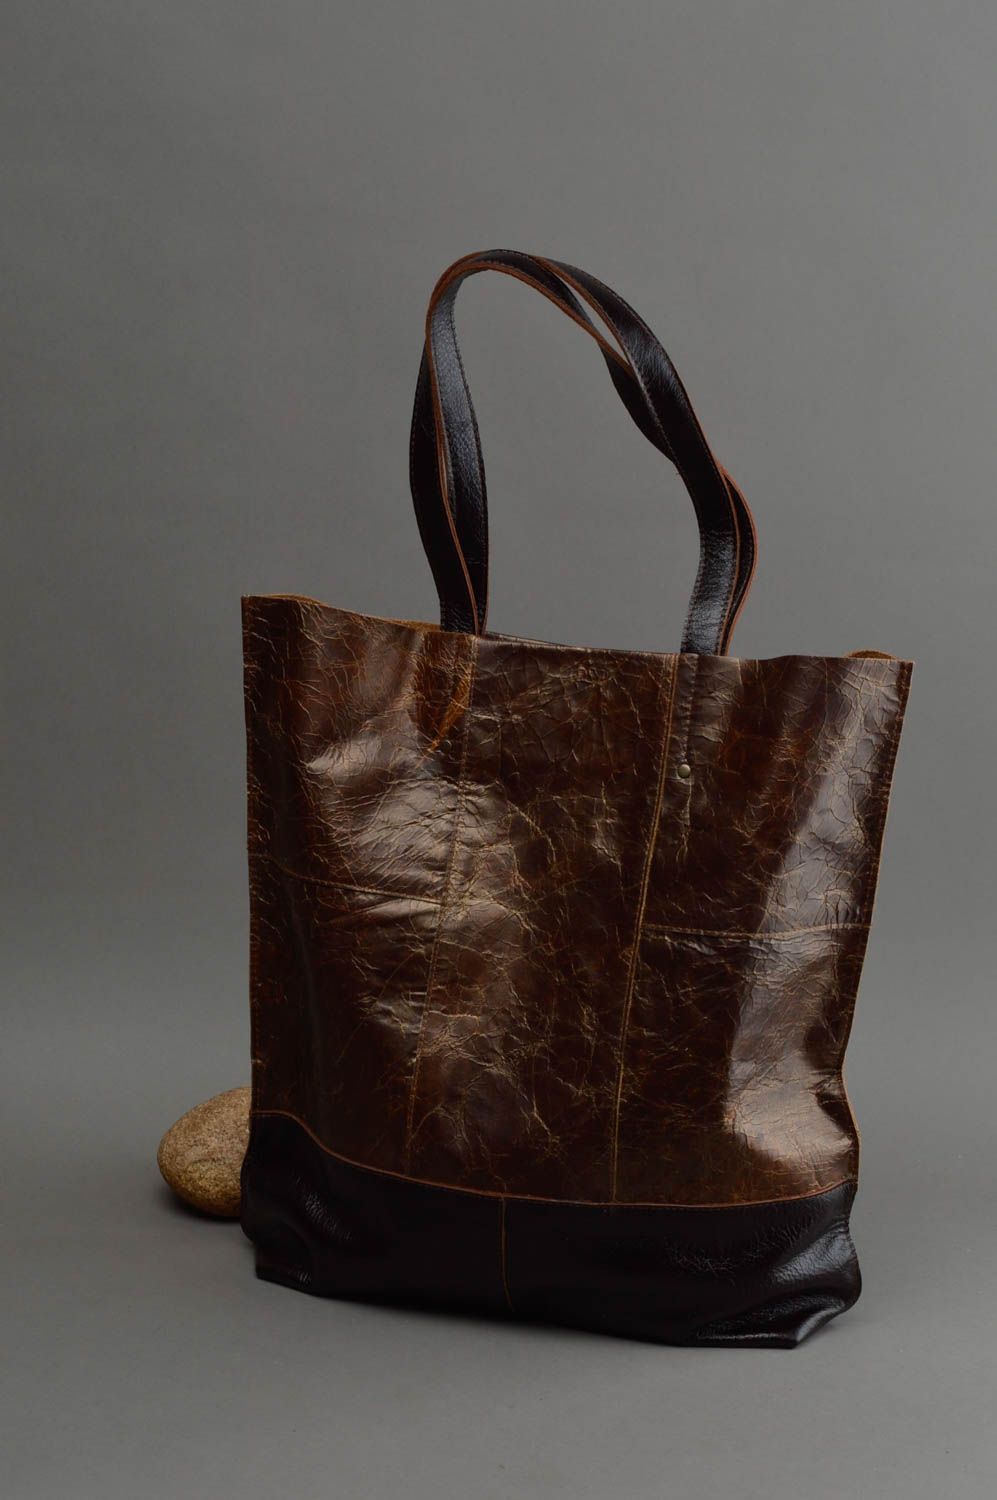 Beautiful handmade genuine leather bag stylish shoulder bag for women gift ideas photo 1